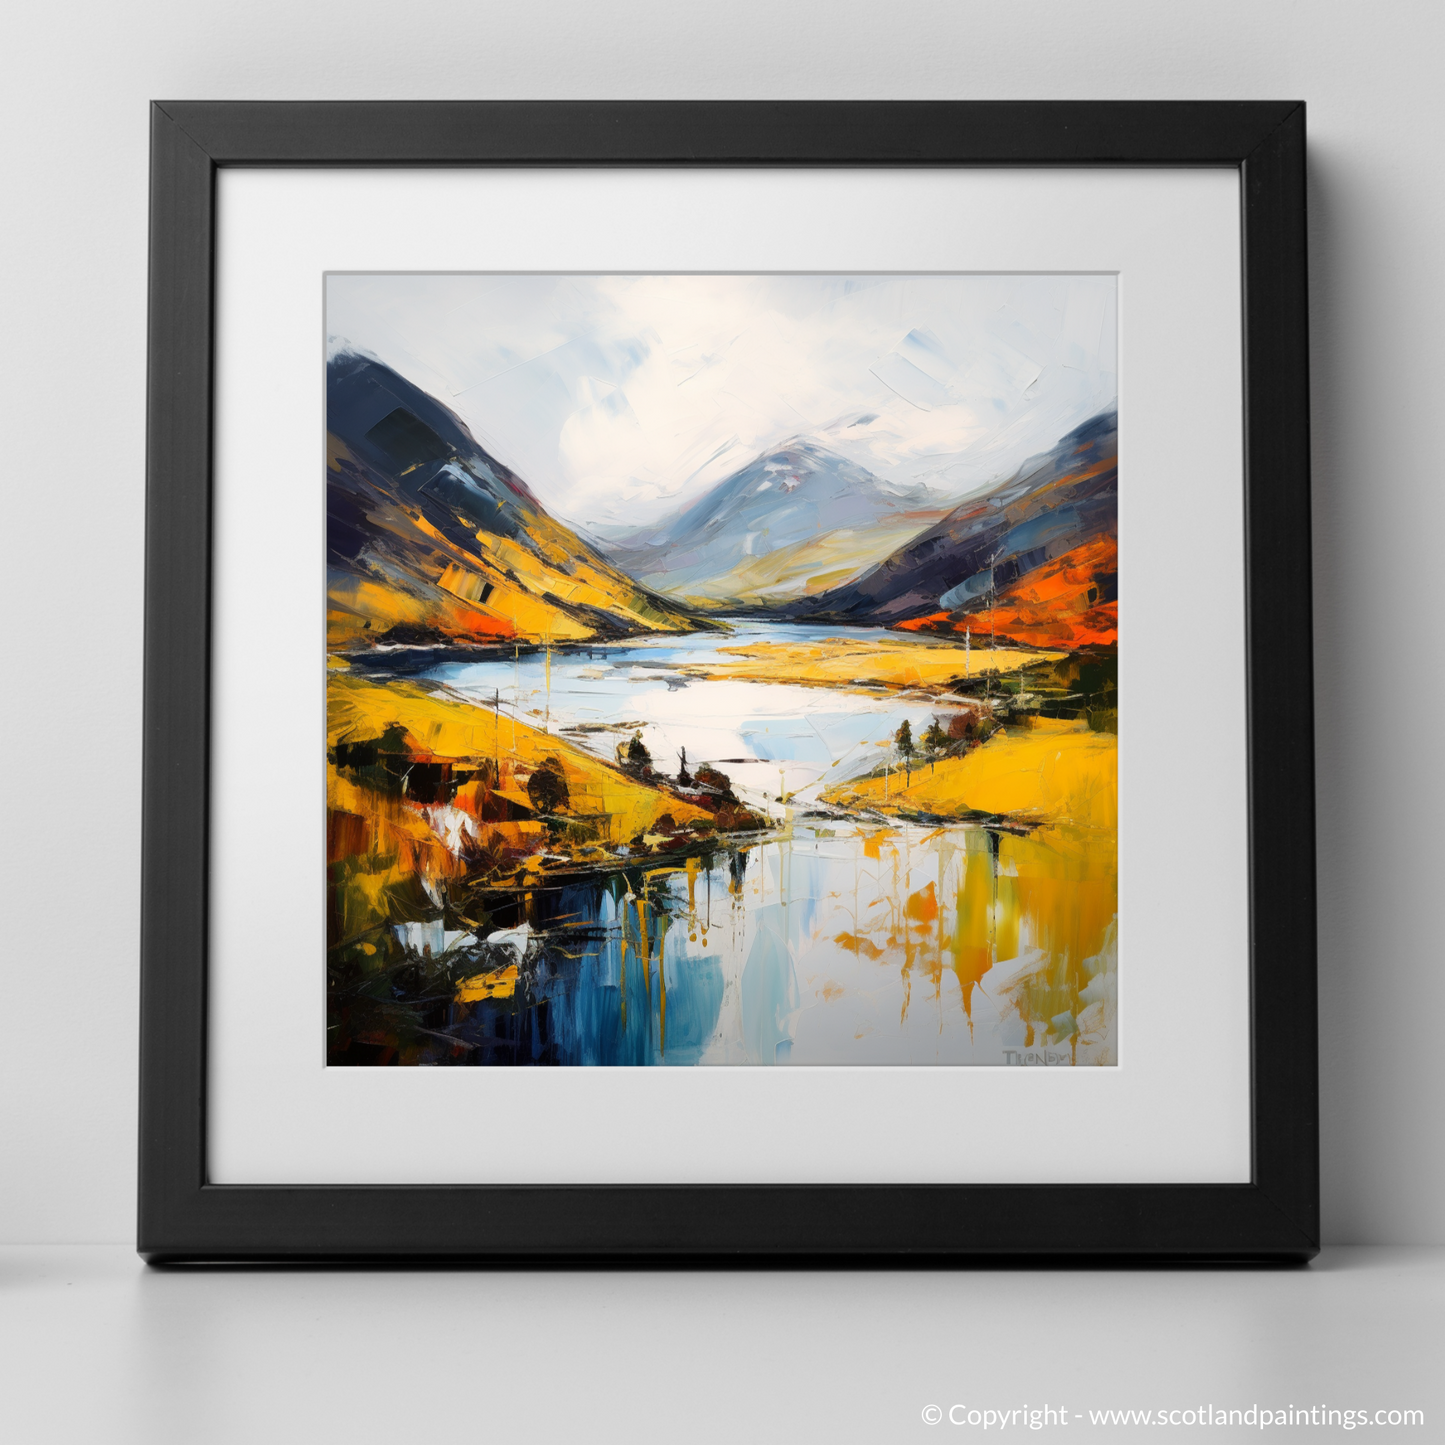 Art Print of Loch Shiel, Highlands with a black frame